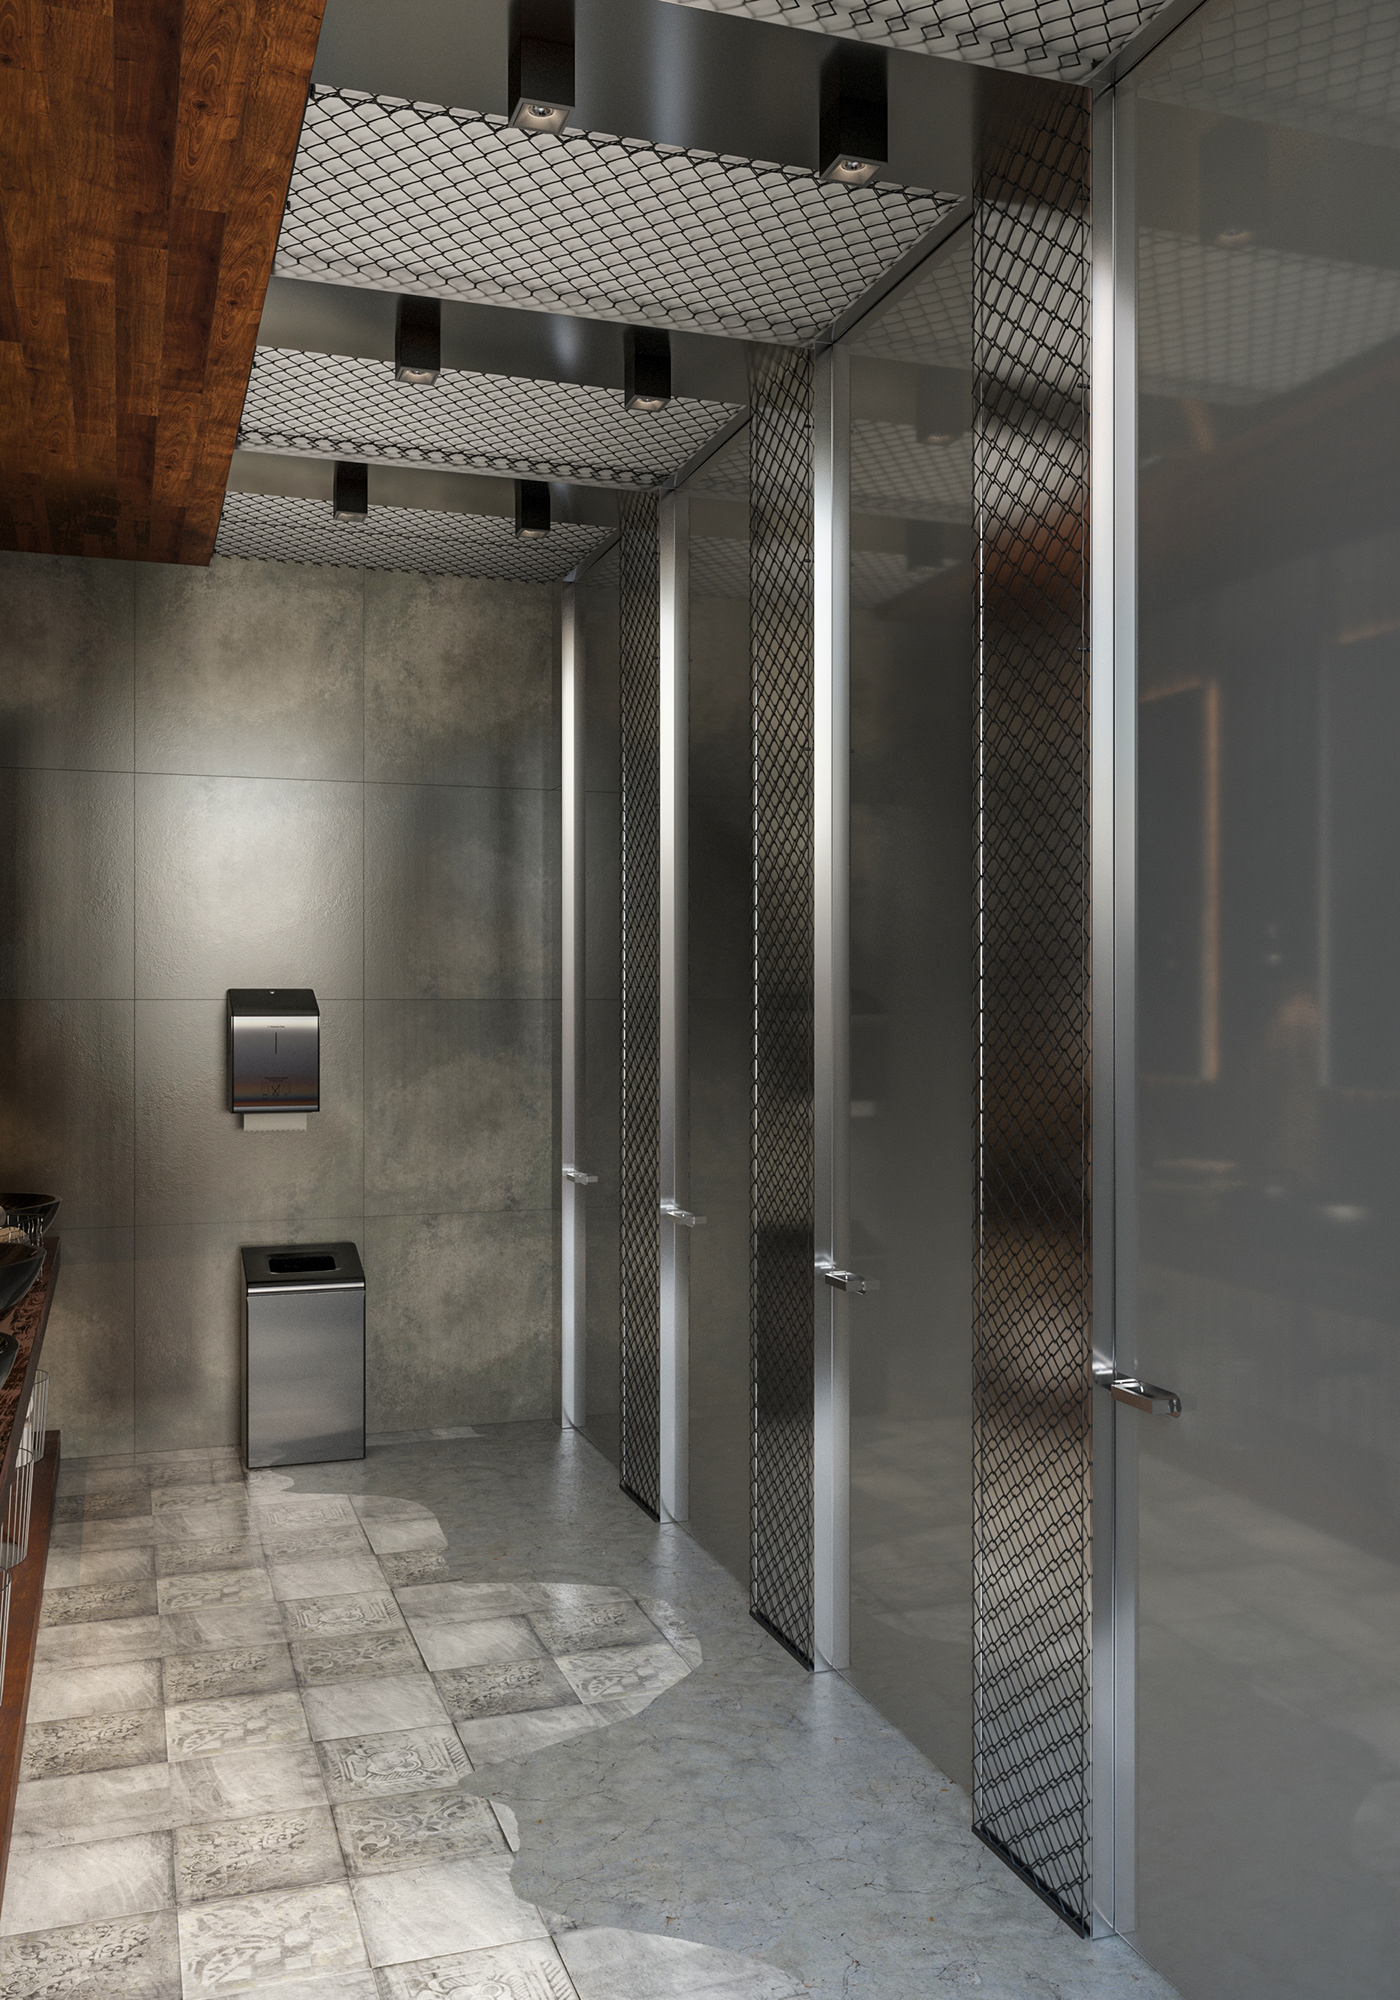 AutoCAD 3dsmax corona renderer adobephotoshop restaurant bathroom design interiordesign wc